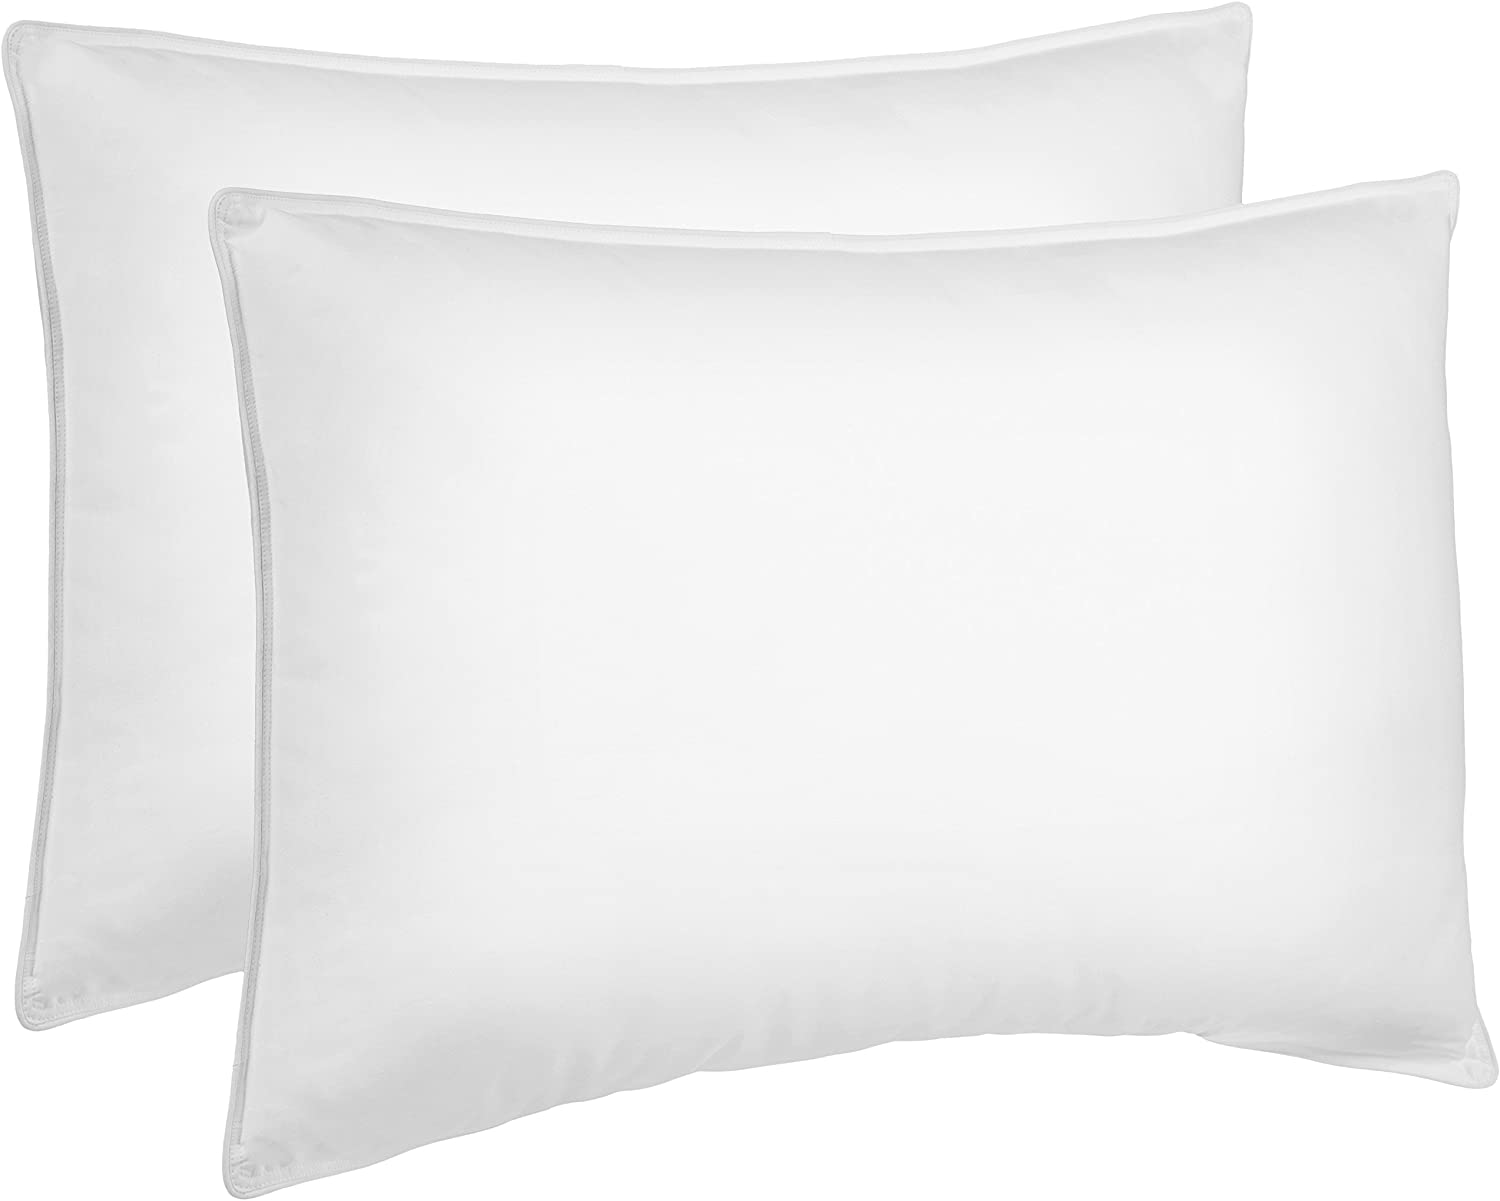 AmazonBasics Polyester Microfiber Soft Pillows, 2-Pack